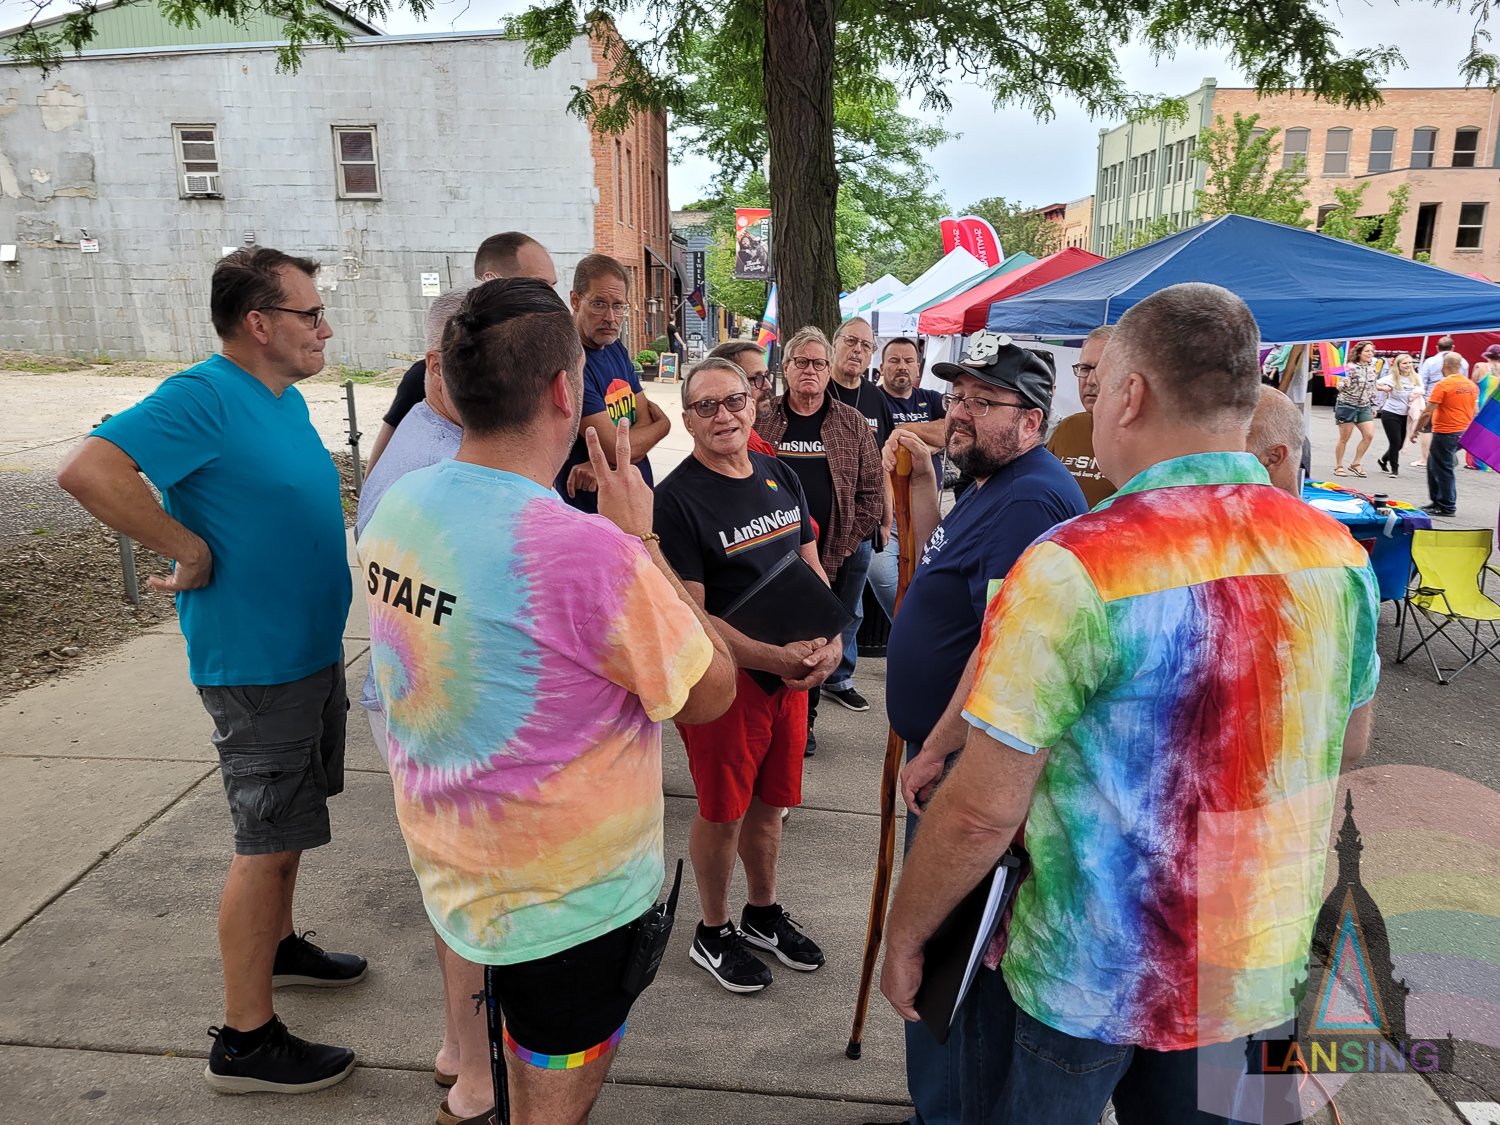 Orion Story joins lineup at Lansing Pride Festival — Lansing Pride